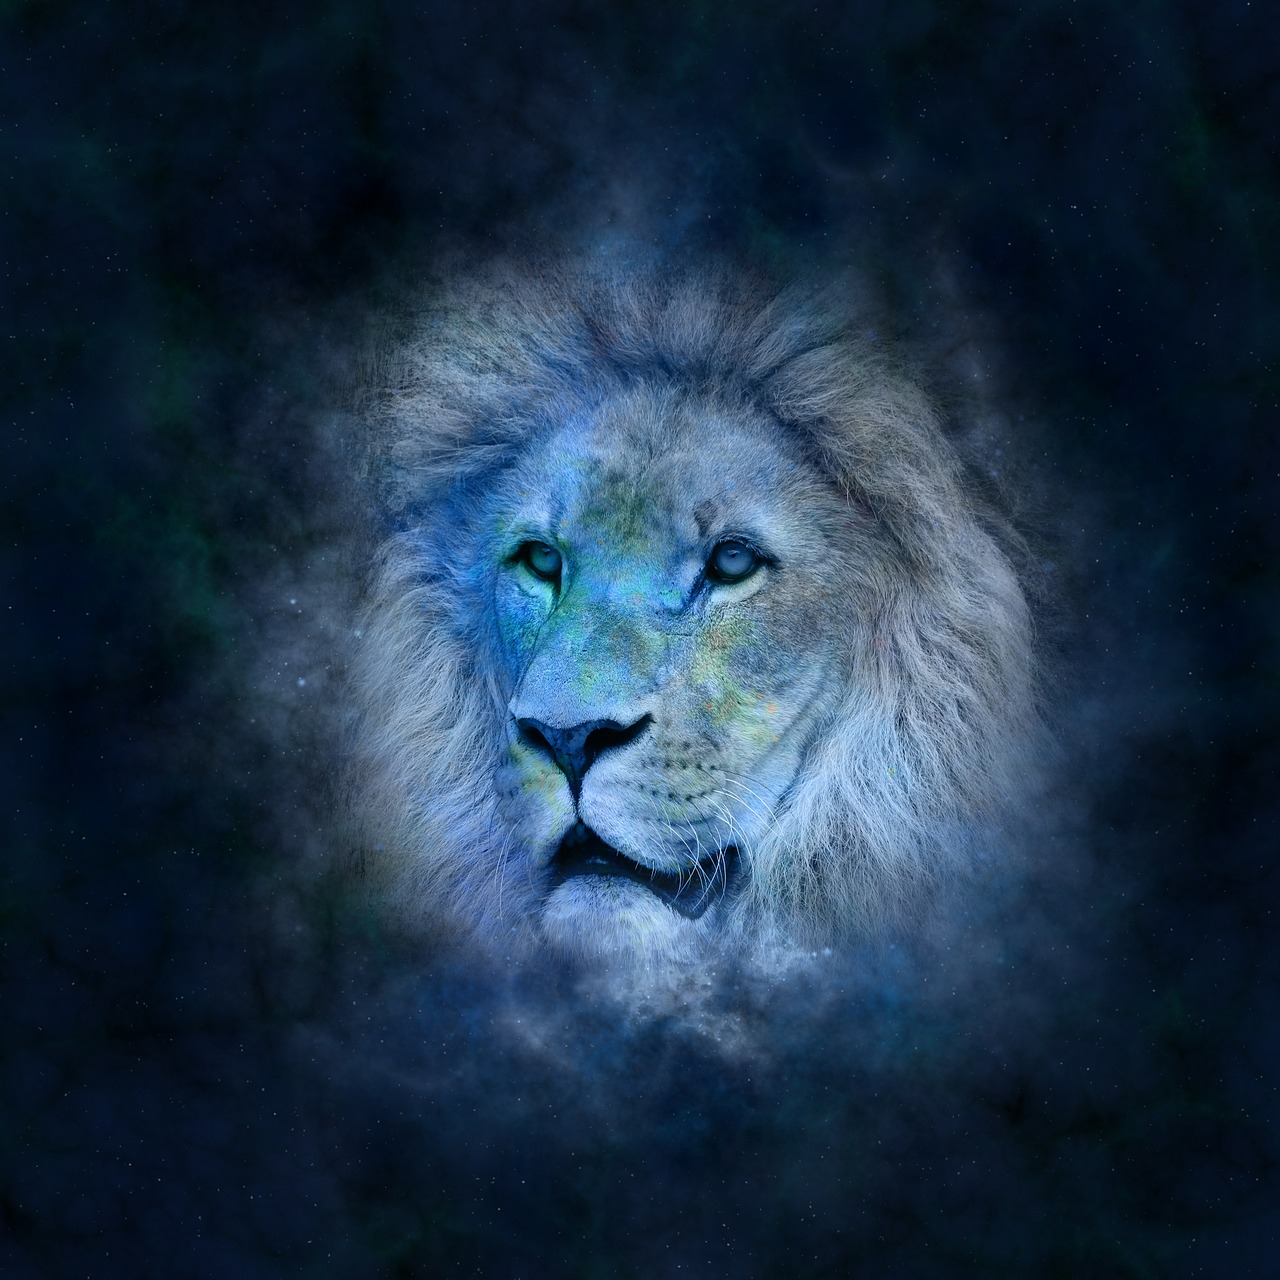 a close up of a lion's face on a dark background, digital art, blue nebula, astrology, high quality fantasy stock photo